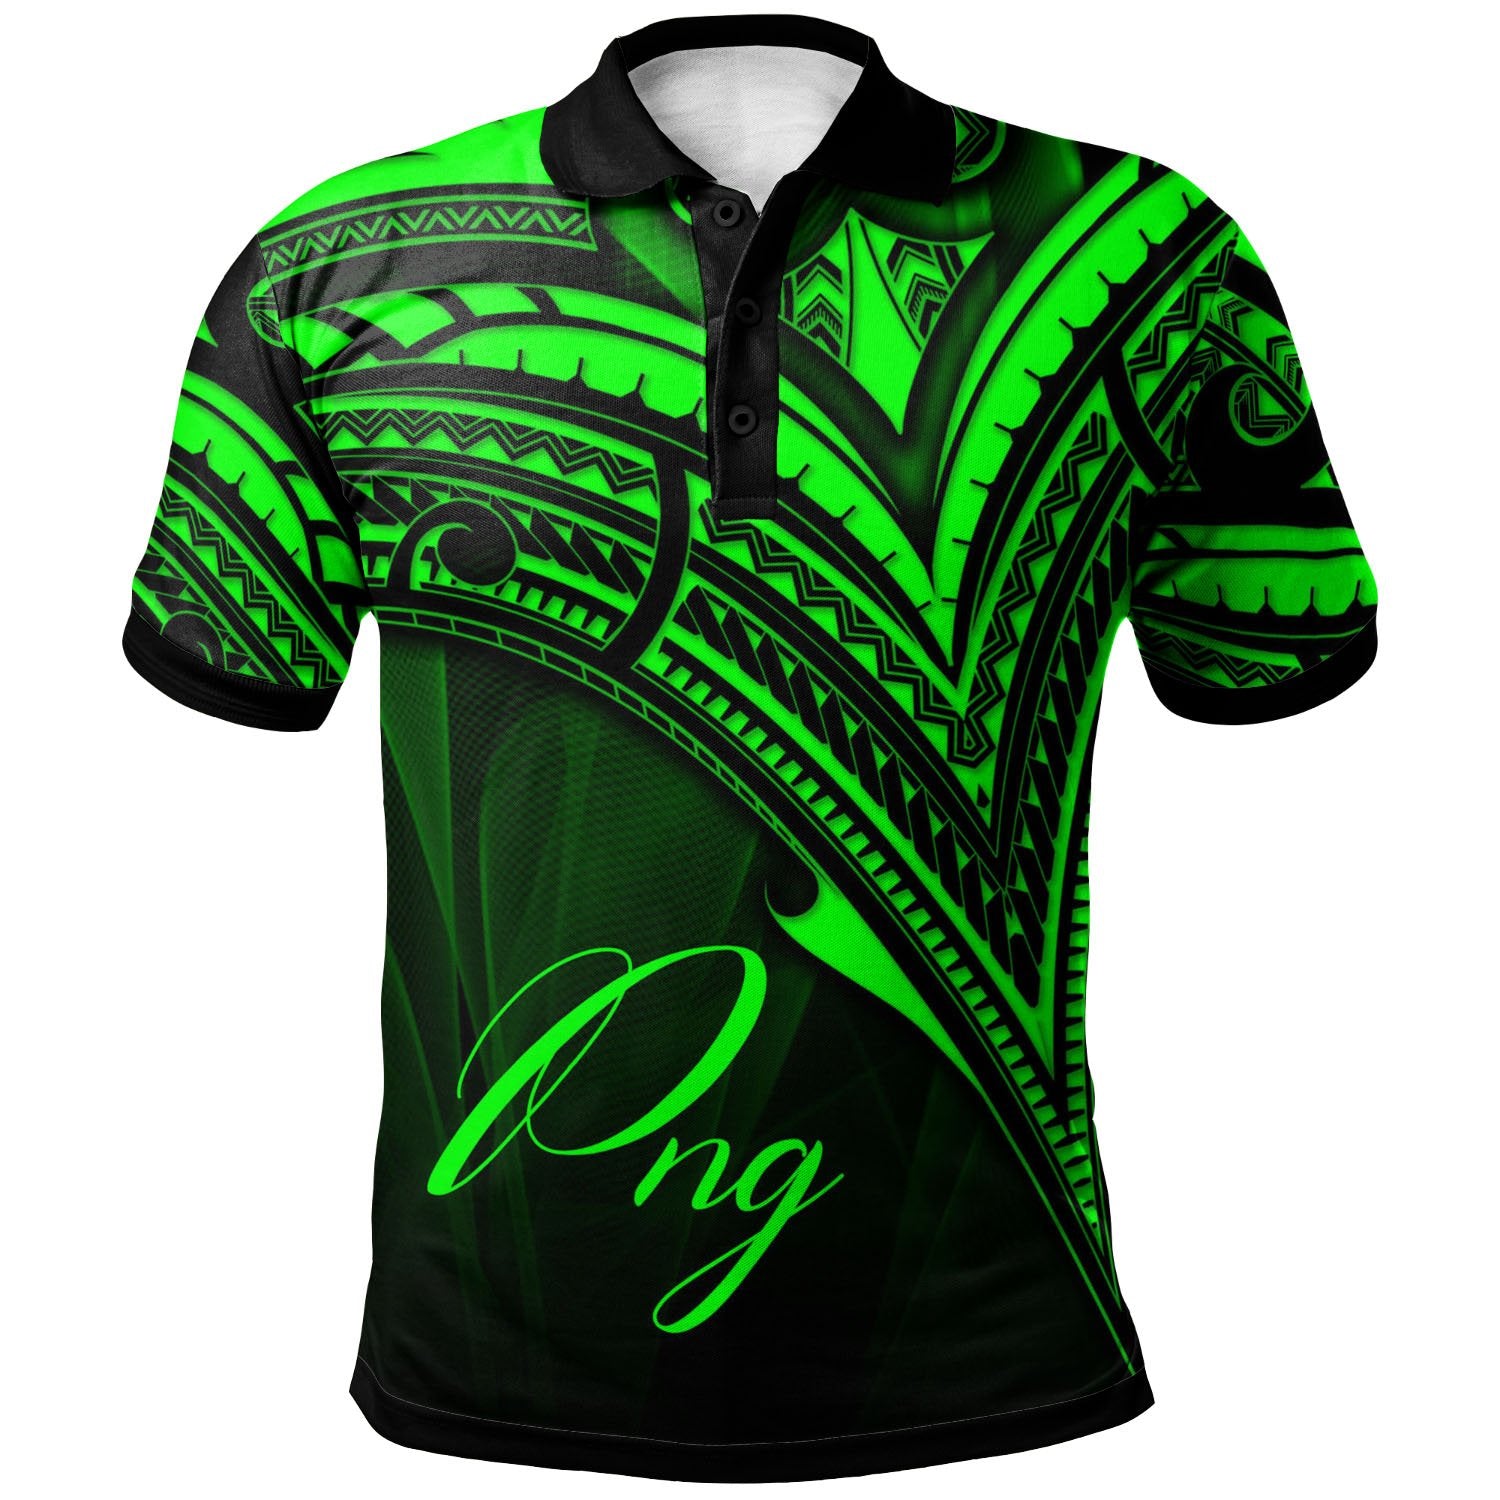 Papua New Guinea Polo Shirt Green Color Cross Style Unisex Black - Polynesian Pride